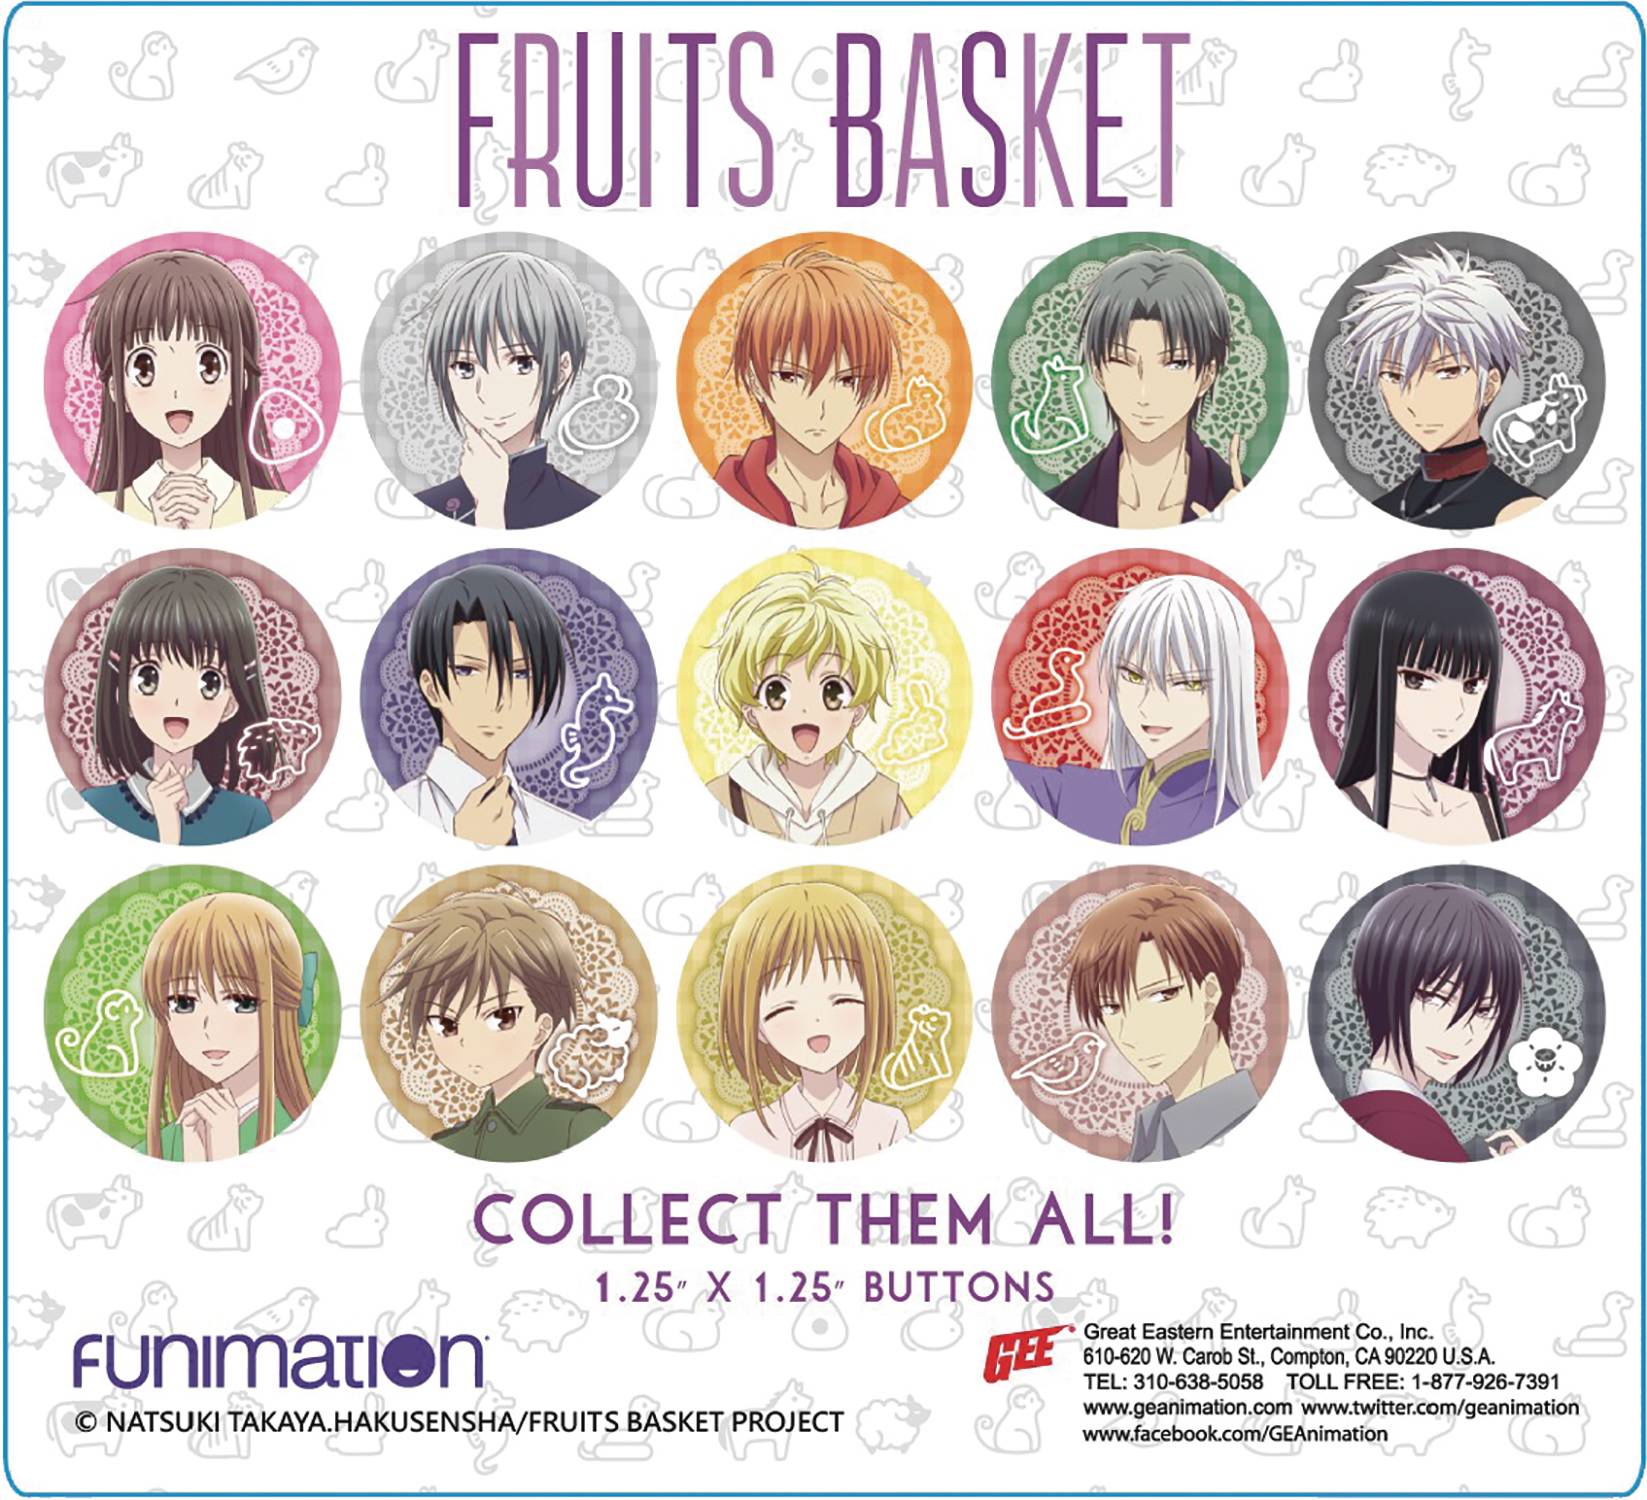 Fruits Basket The Final Season Episode 13 - Anime Review